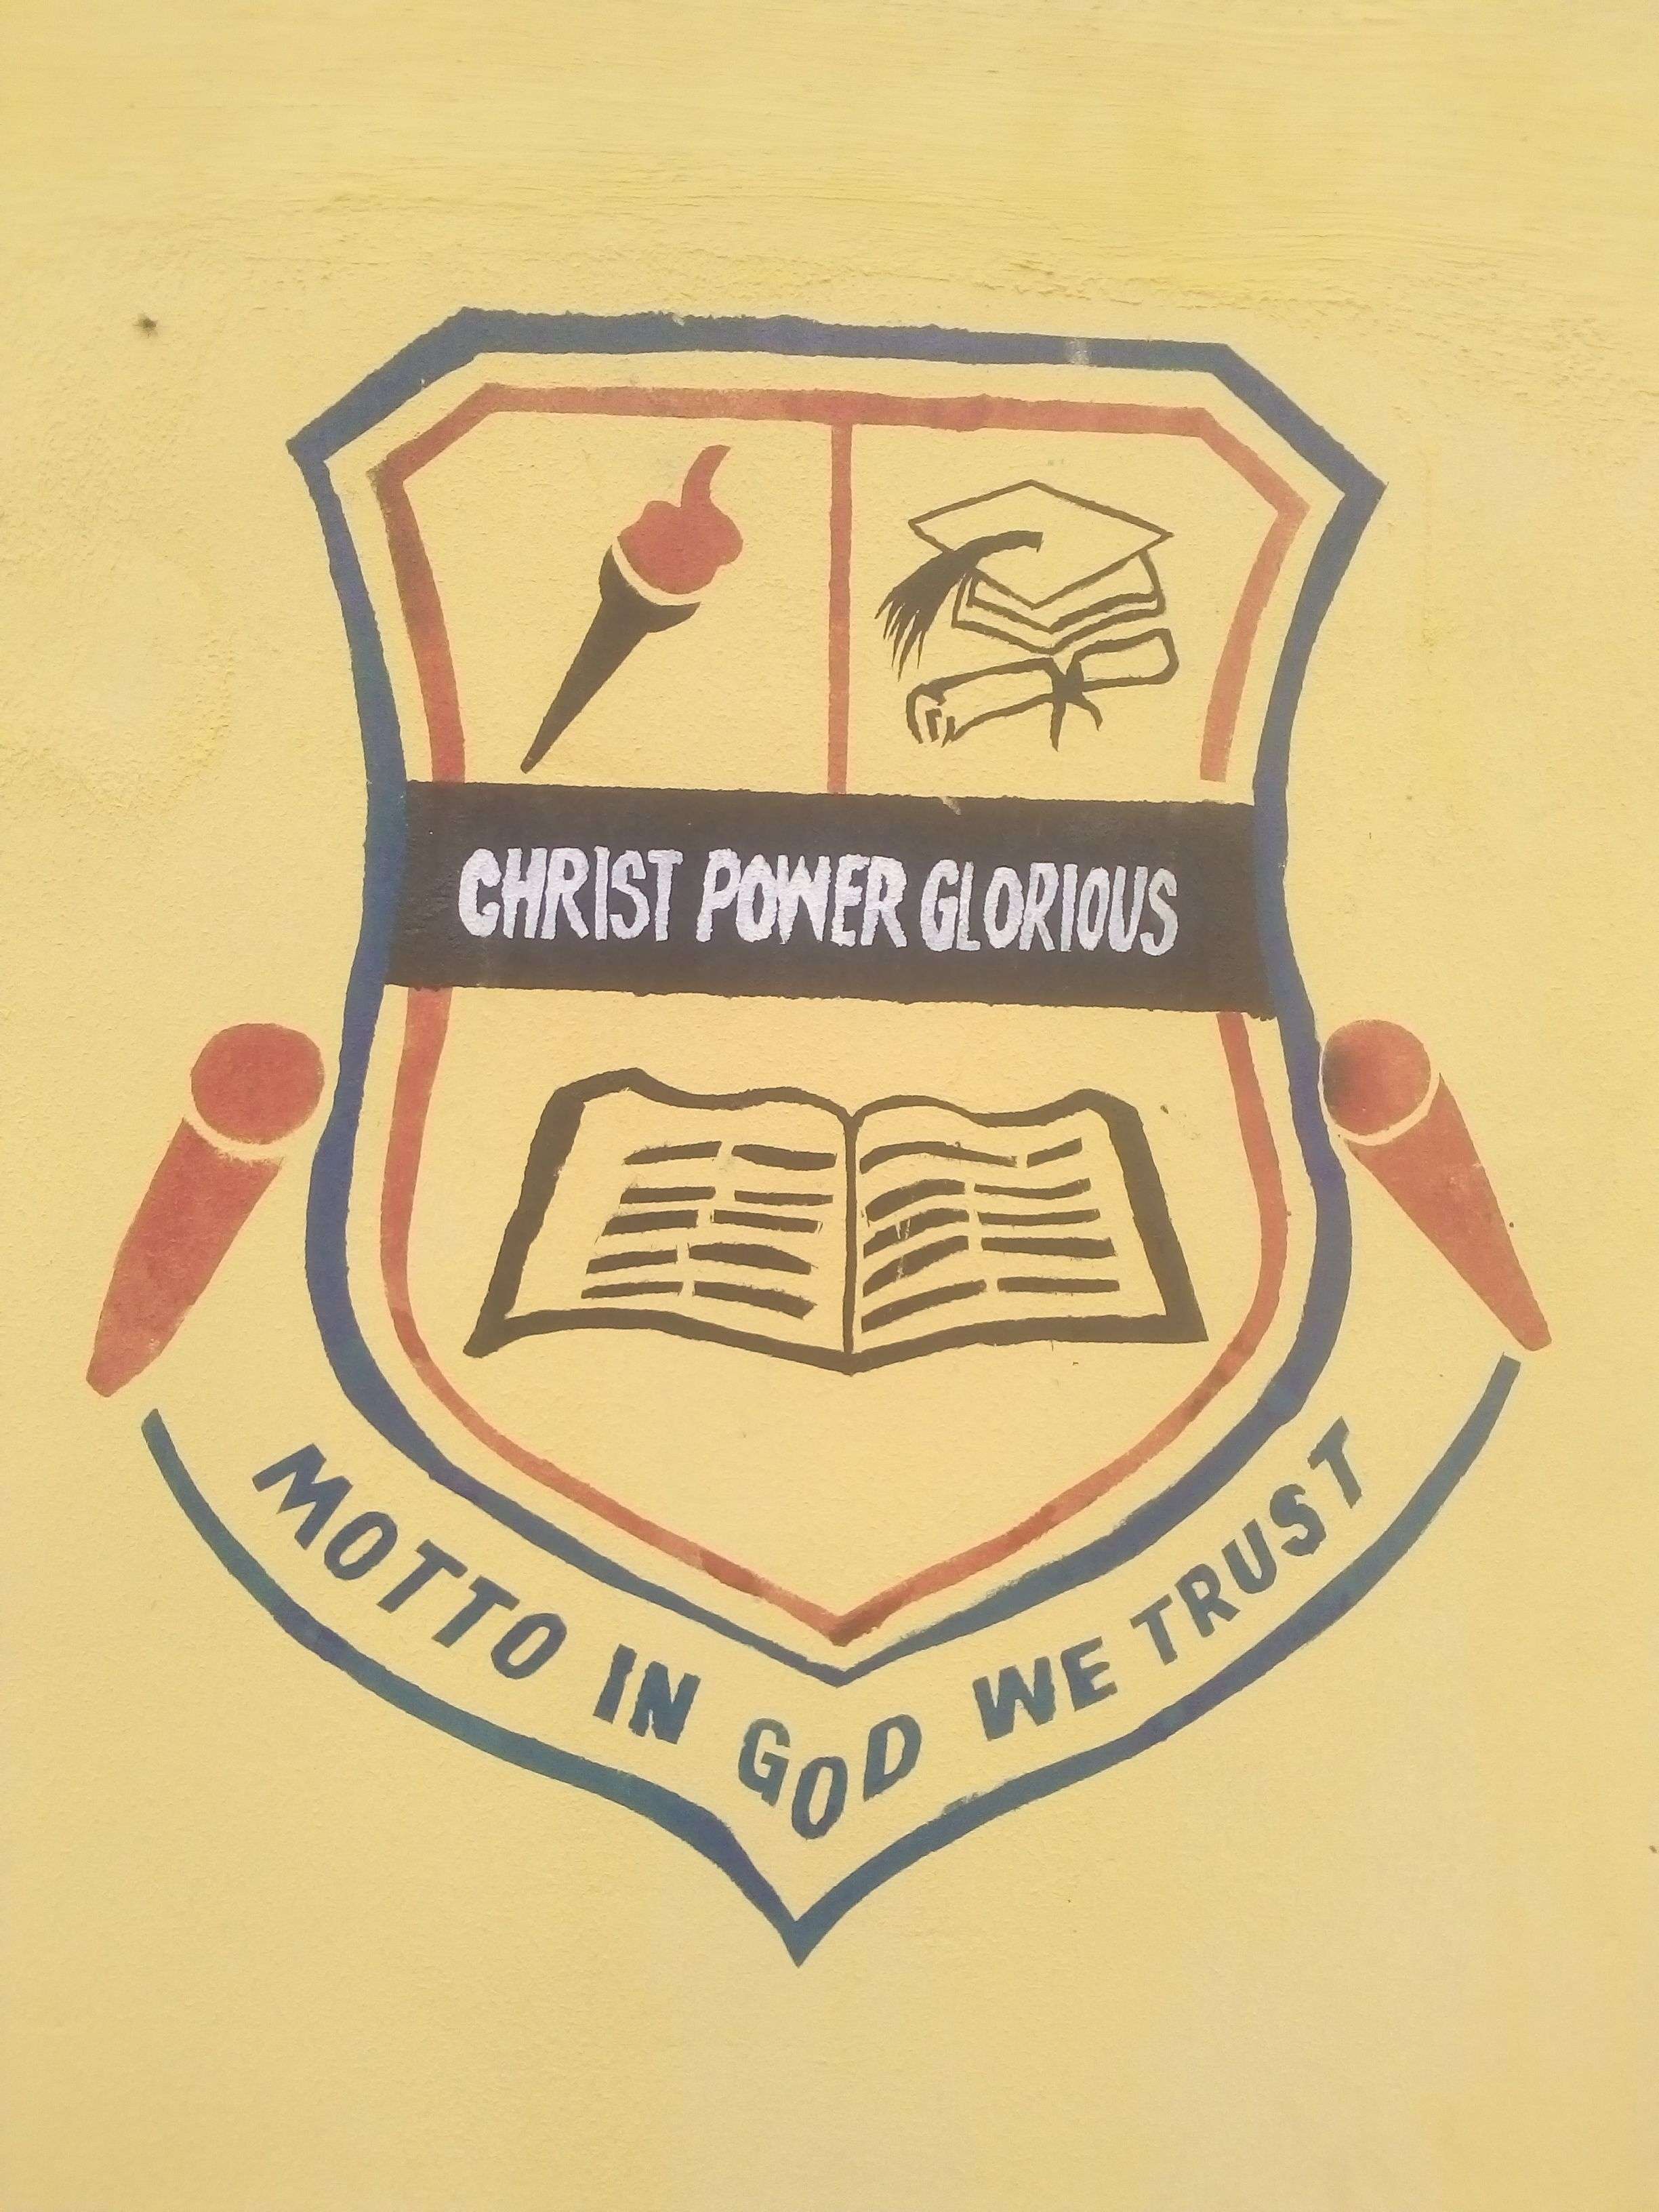 Christ power